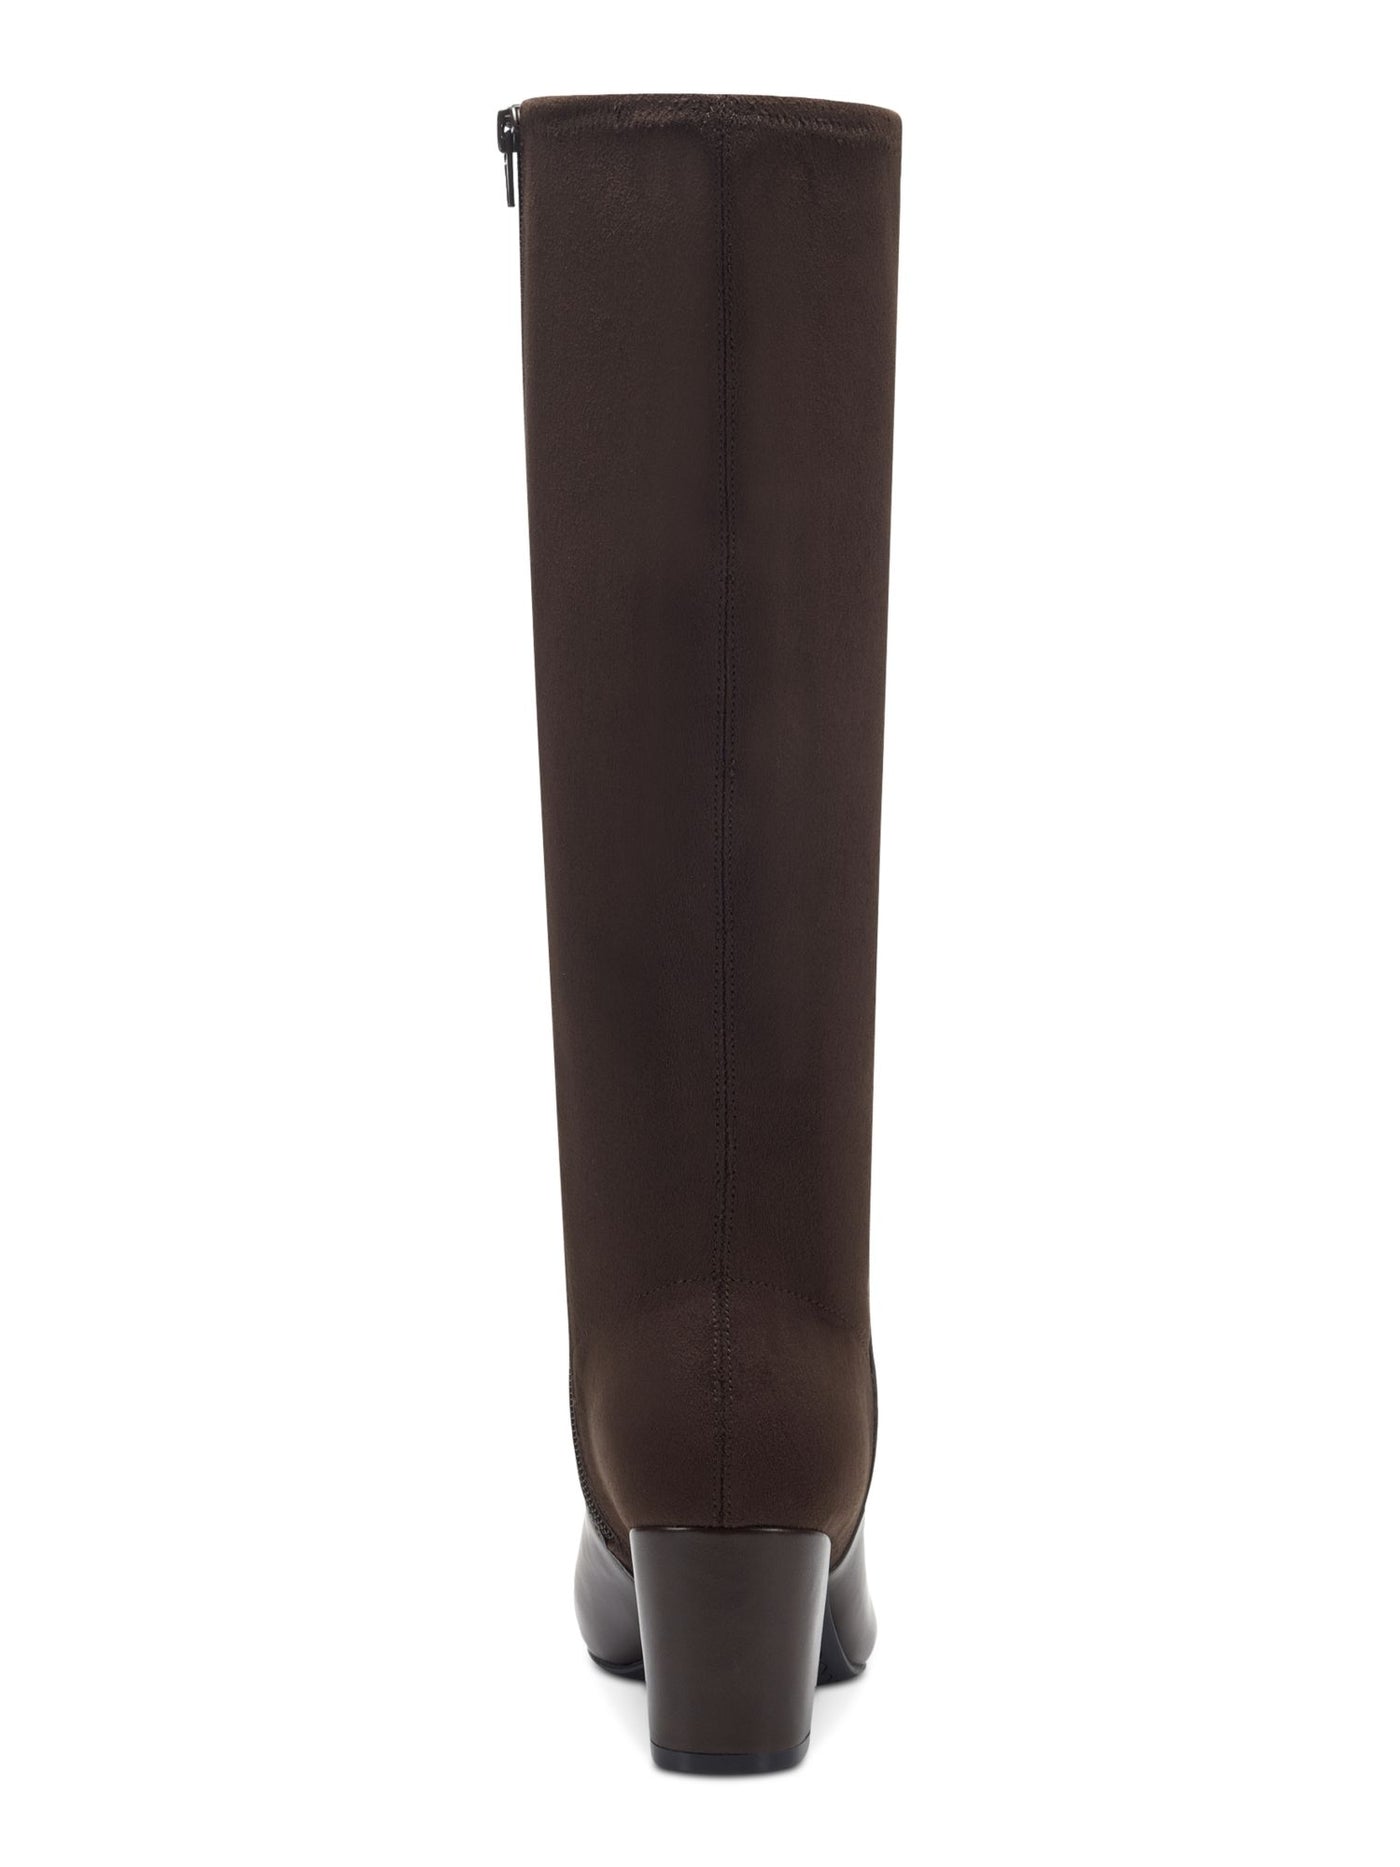 CHARTER CLUB Womens Chocolate Black Mixed Media Cushioned Sacaria Almond Toe Block Heel Zip-Up Dress Boots 5 M